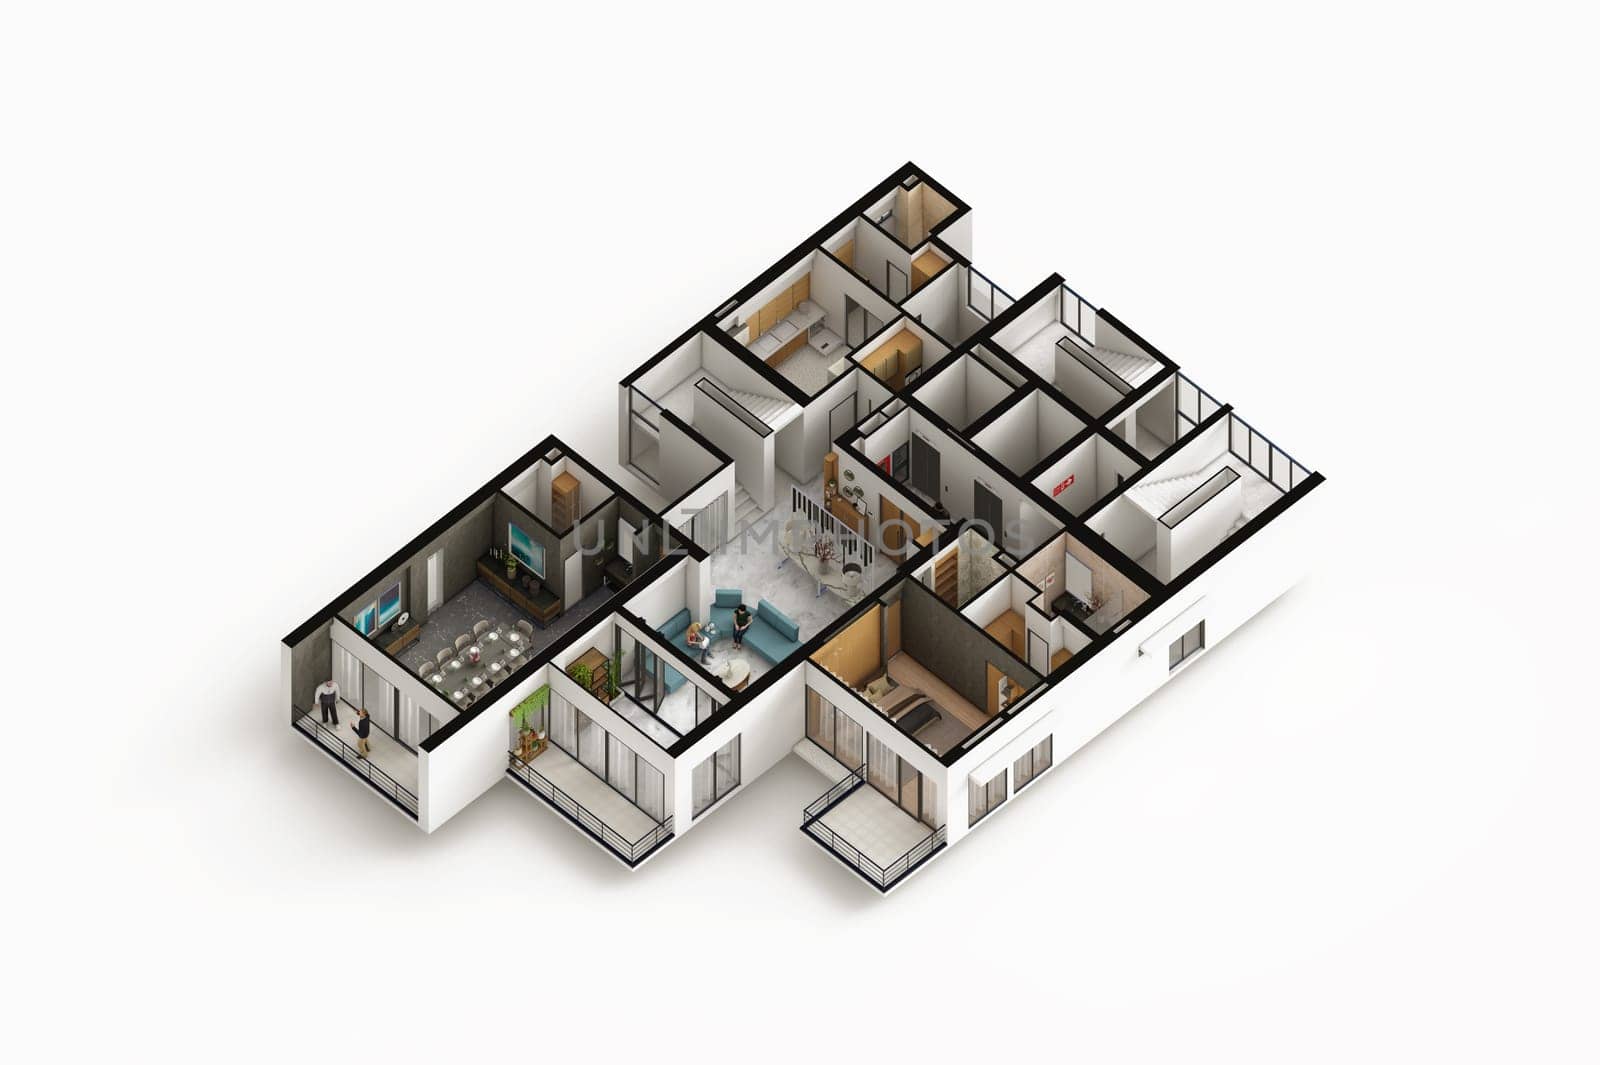 4 bedroom Duplex Apartment typical floor plan 1 by shawlinmohd